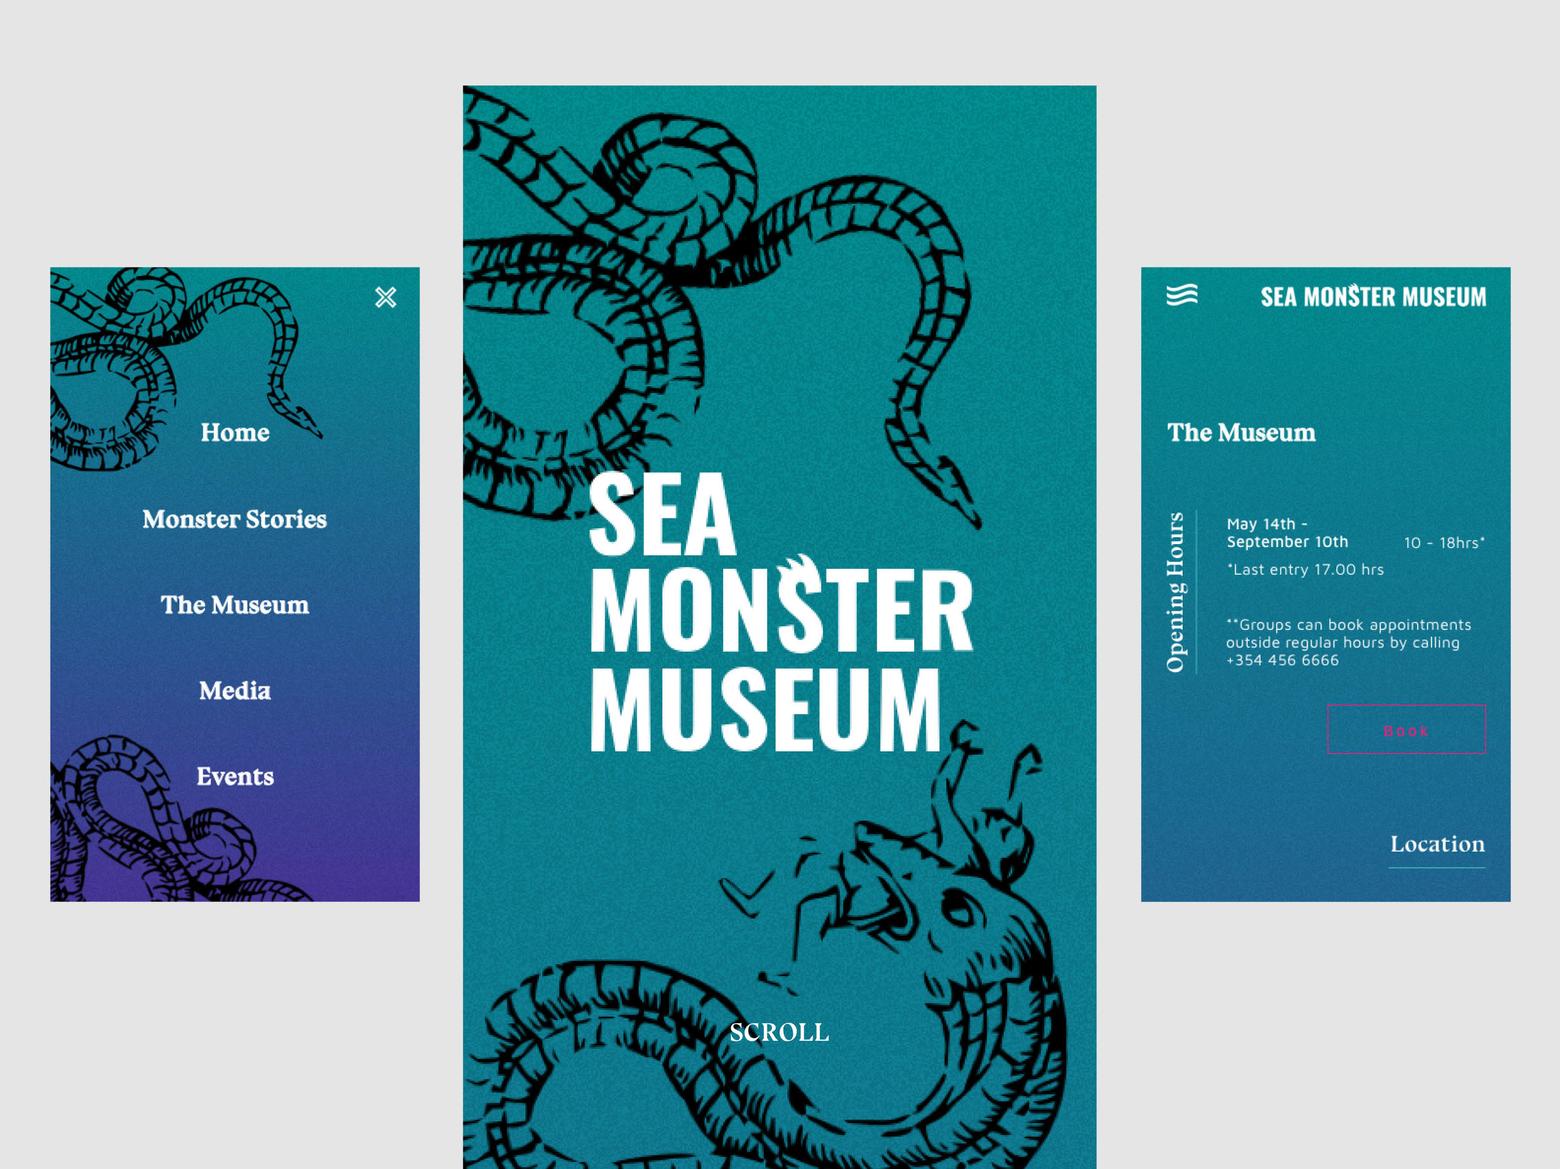 Sea Monster Museum mobile app